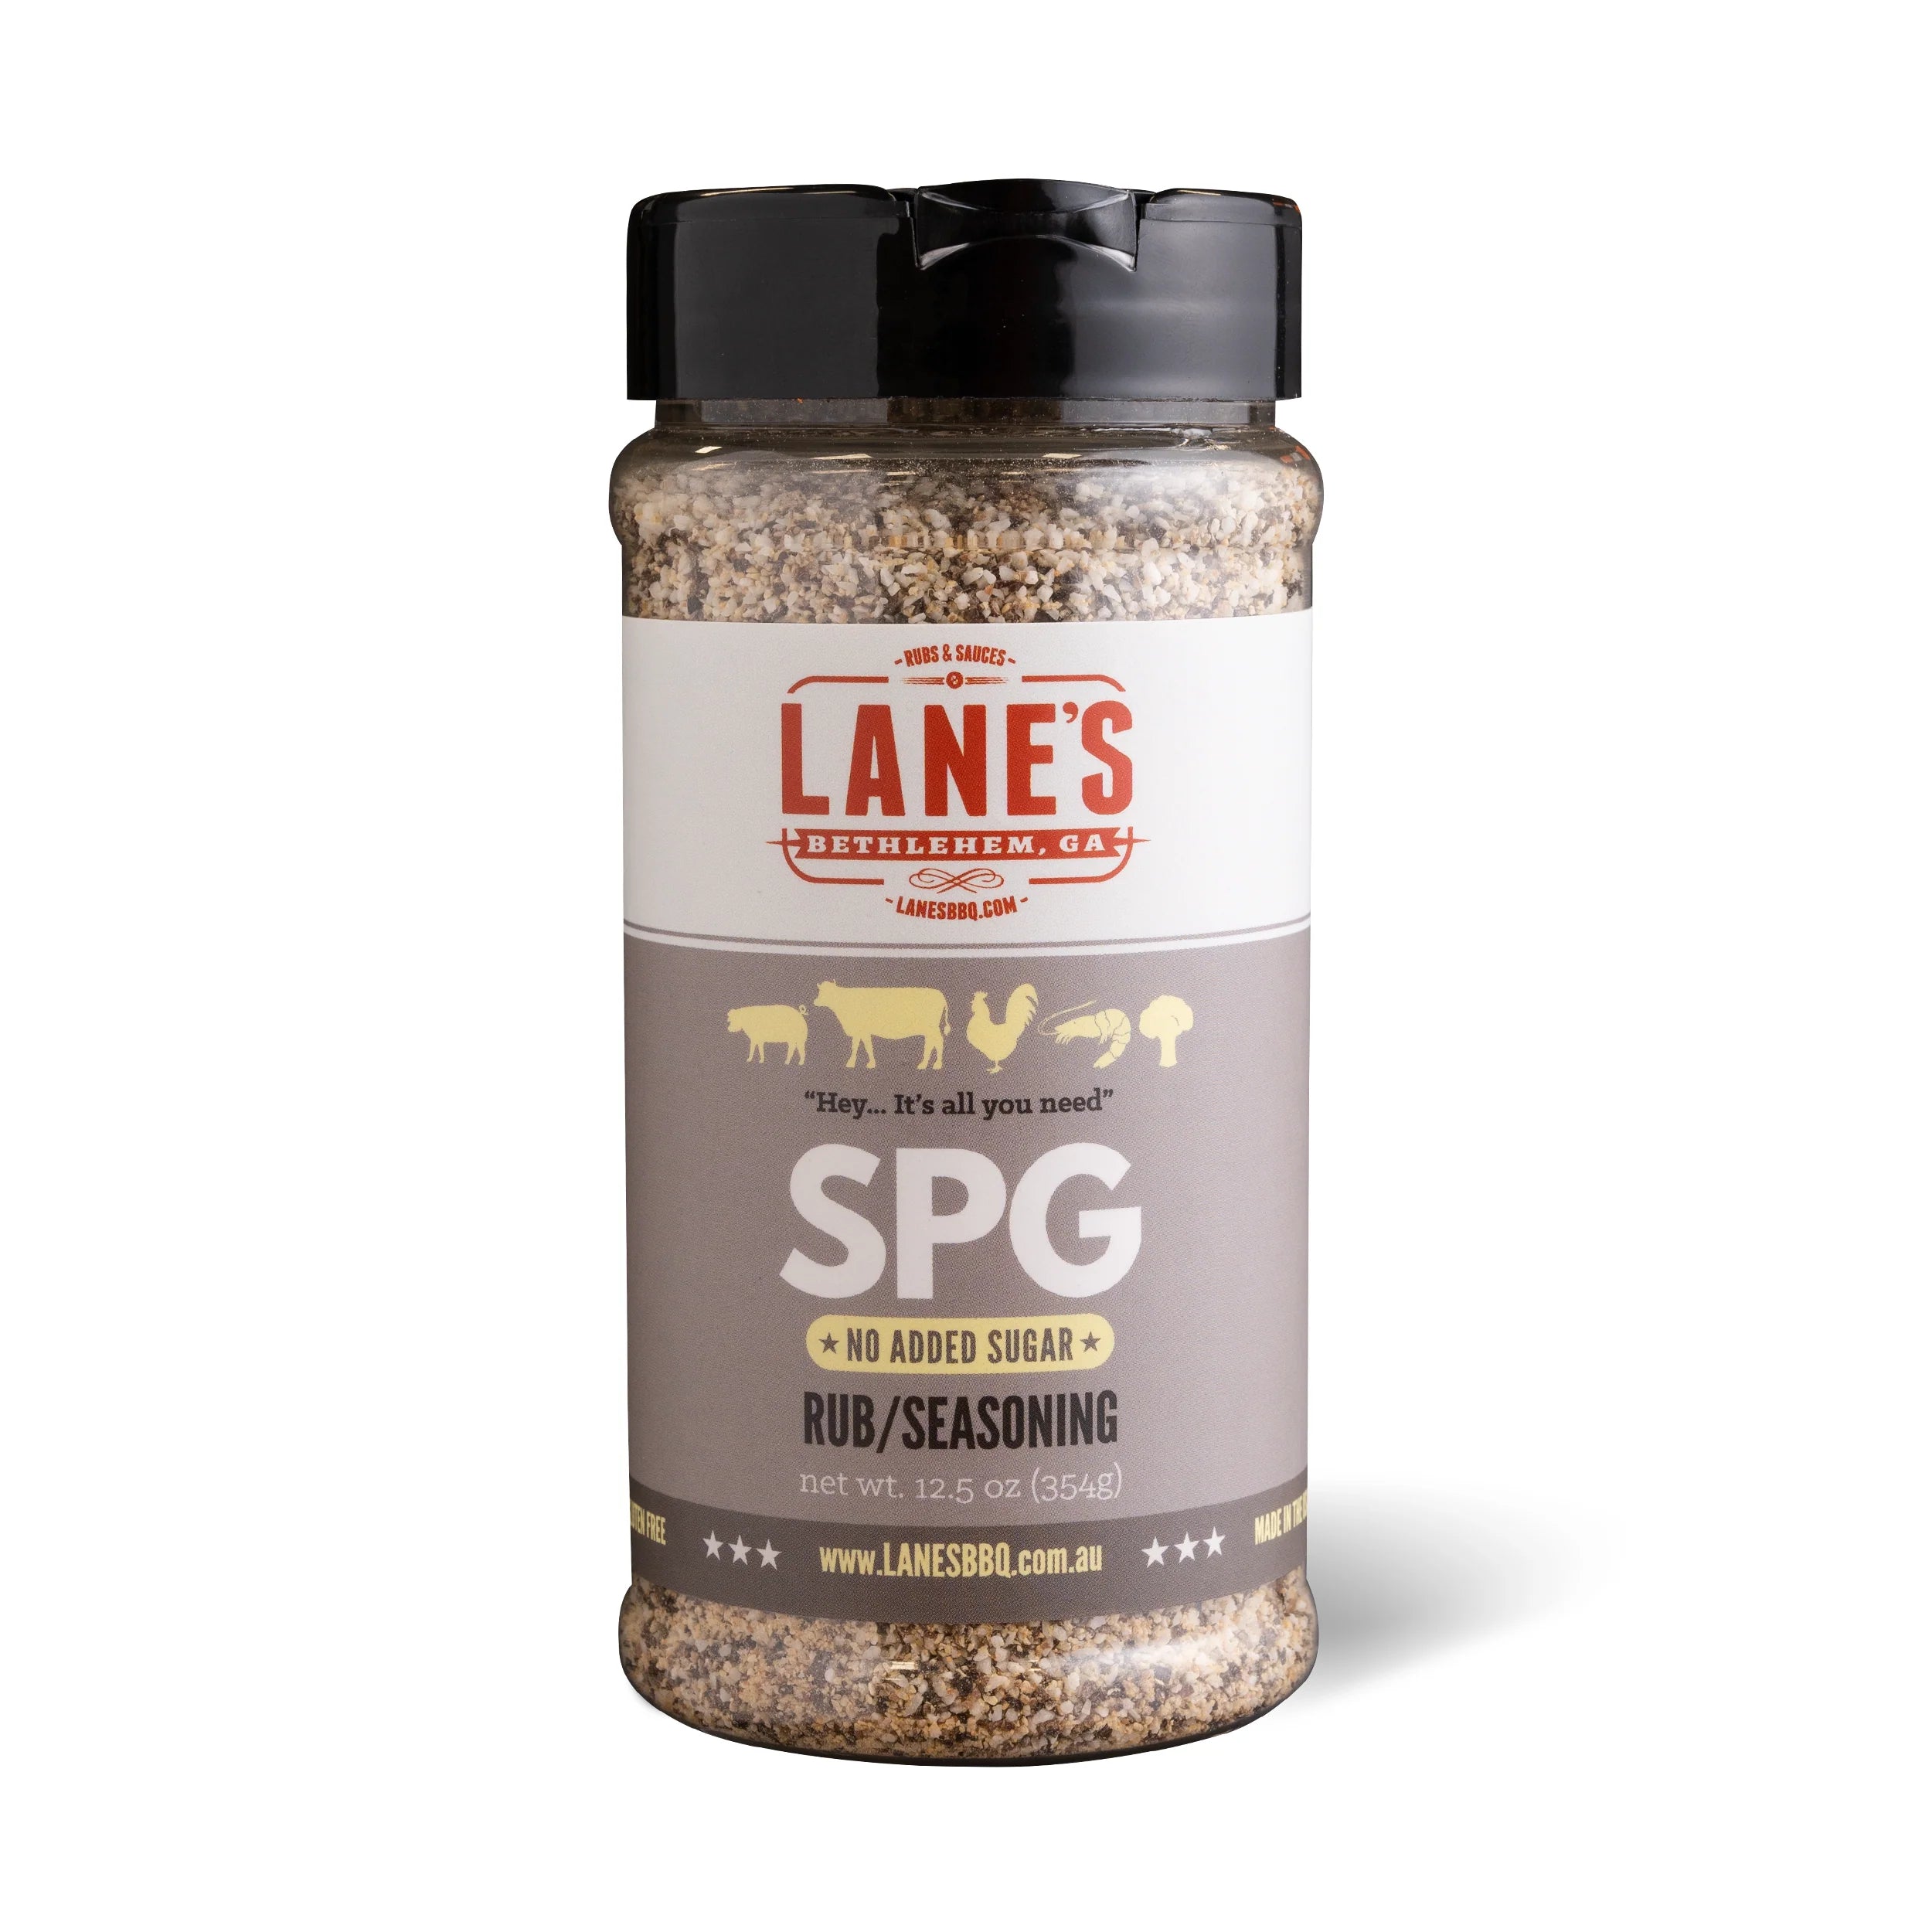 Lanes BBQ SPG (Salt, Pepper, Garlic) Seasoning - 354gm